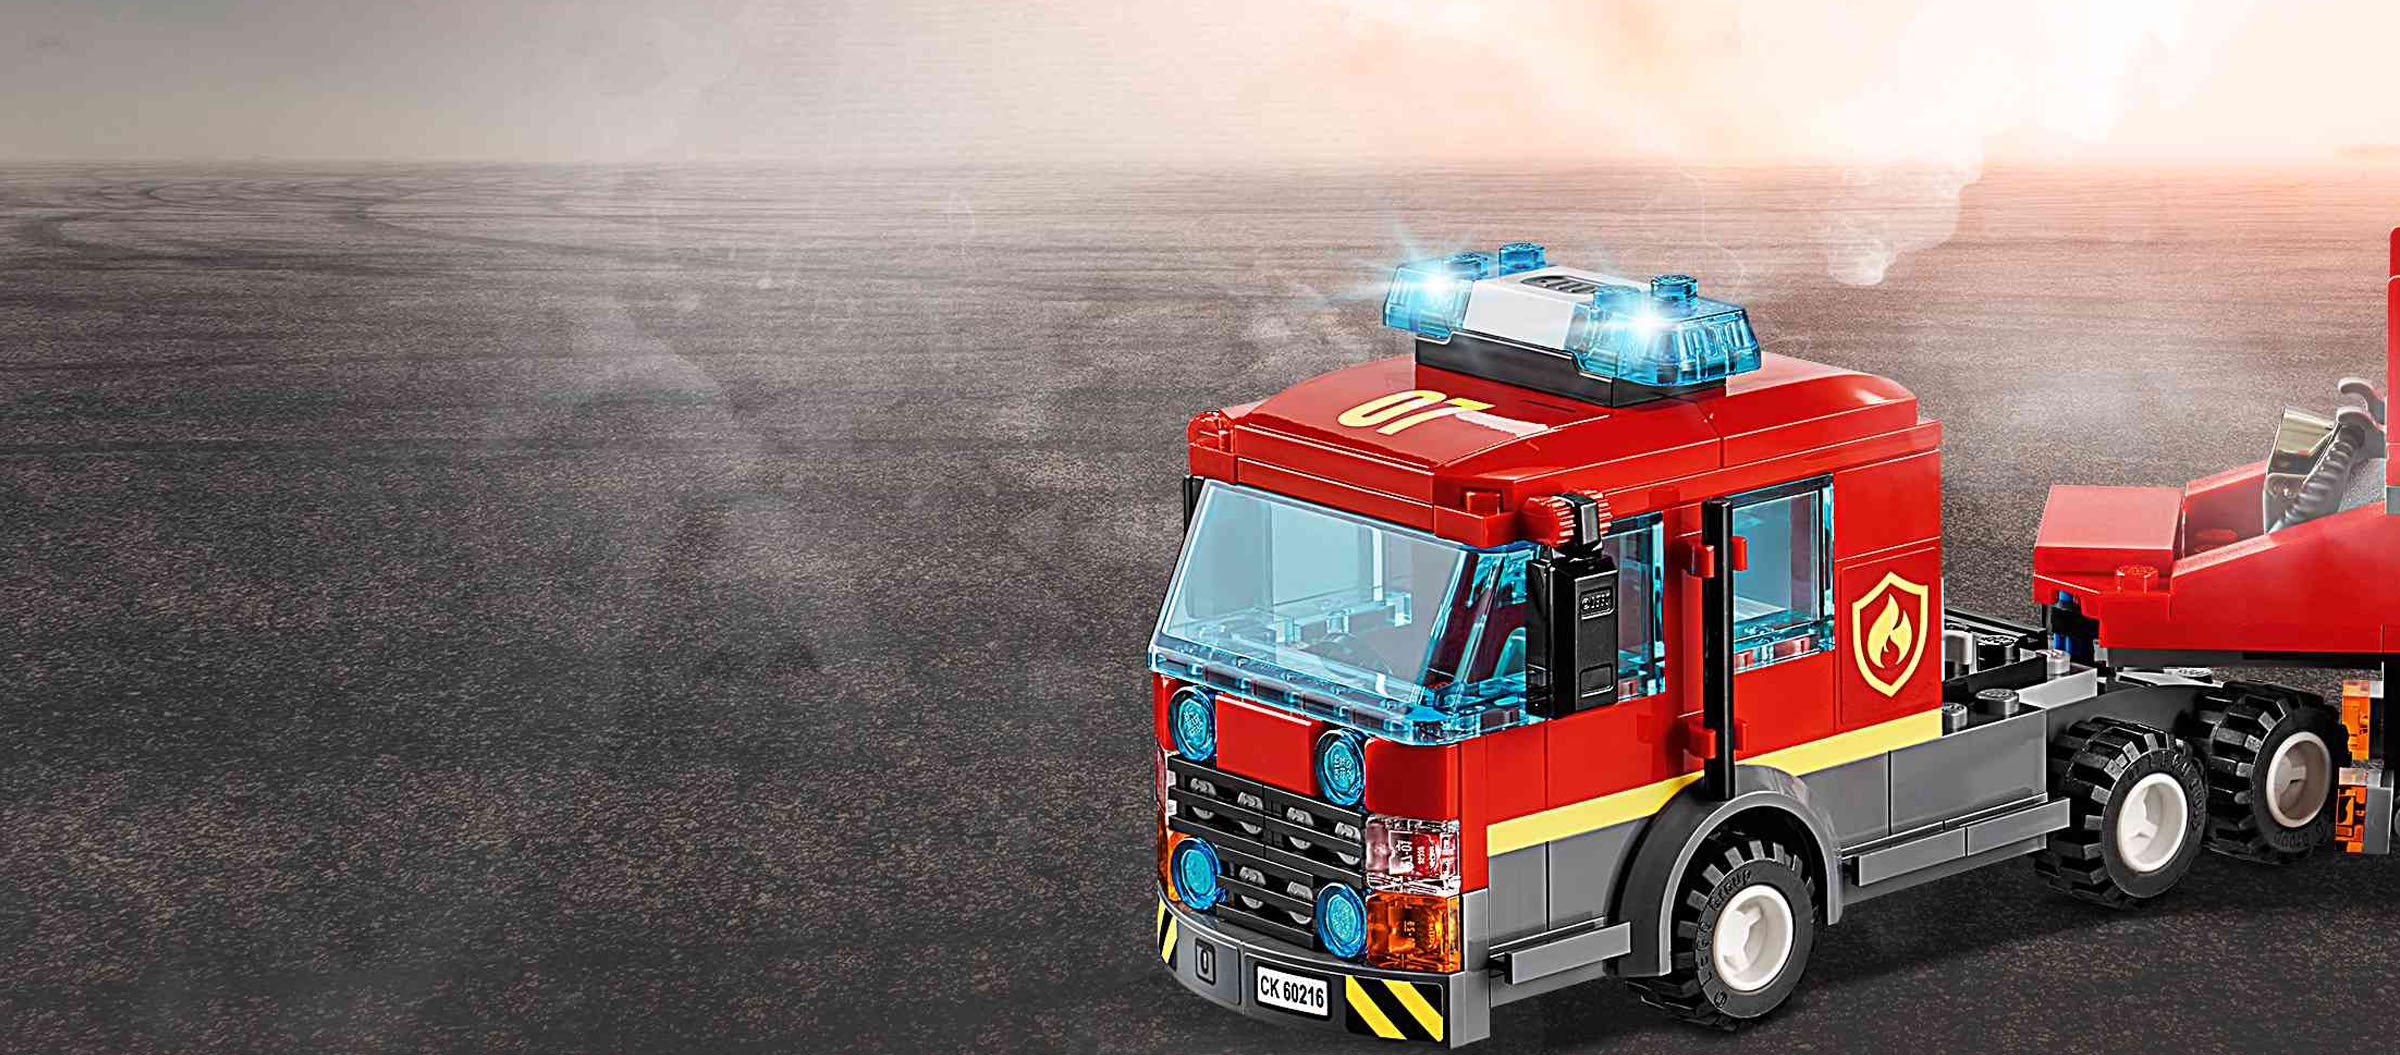 lego city fire truck videos